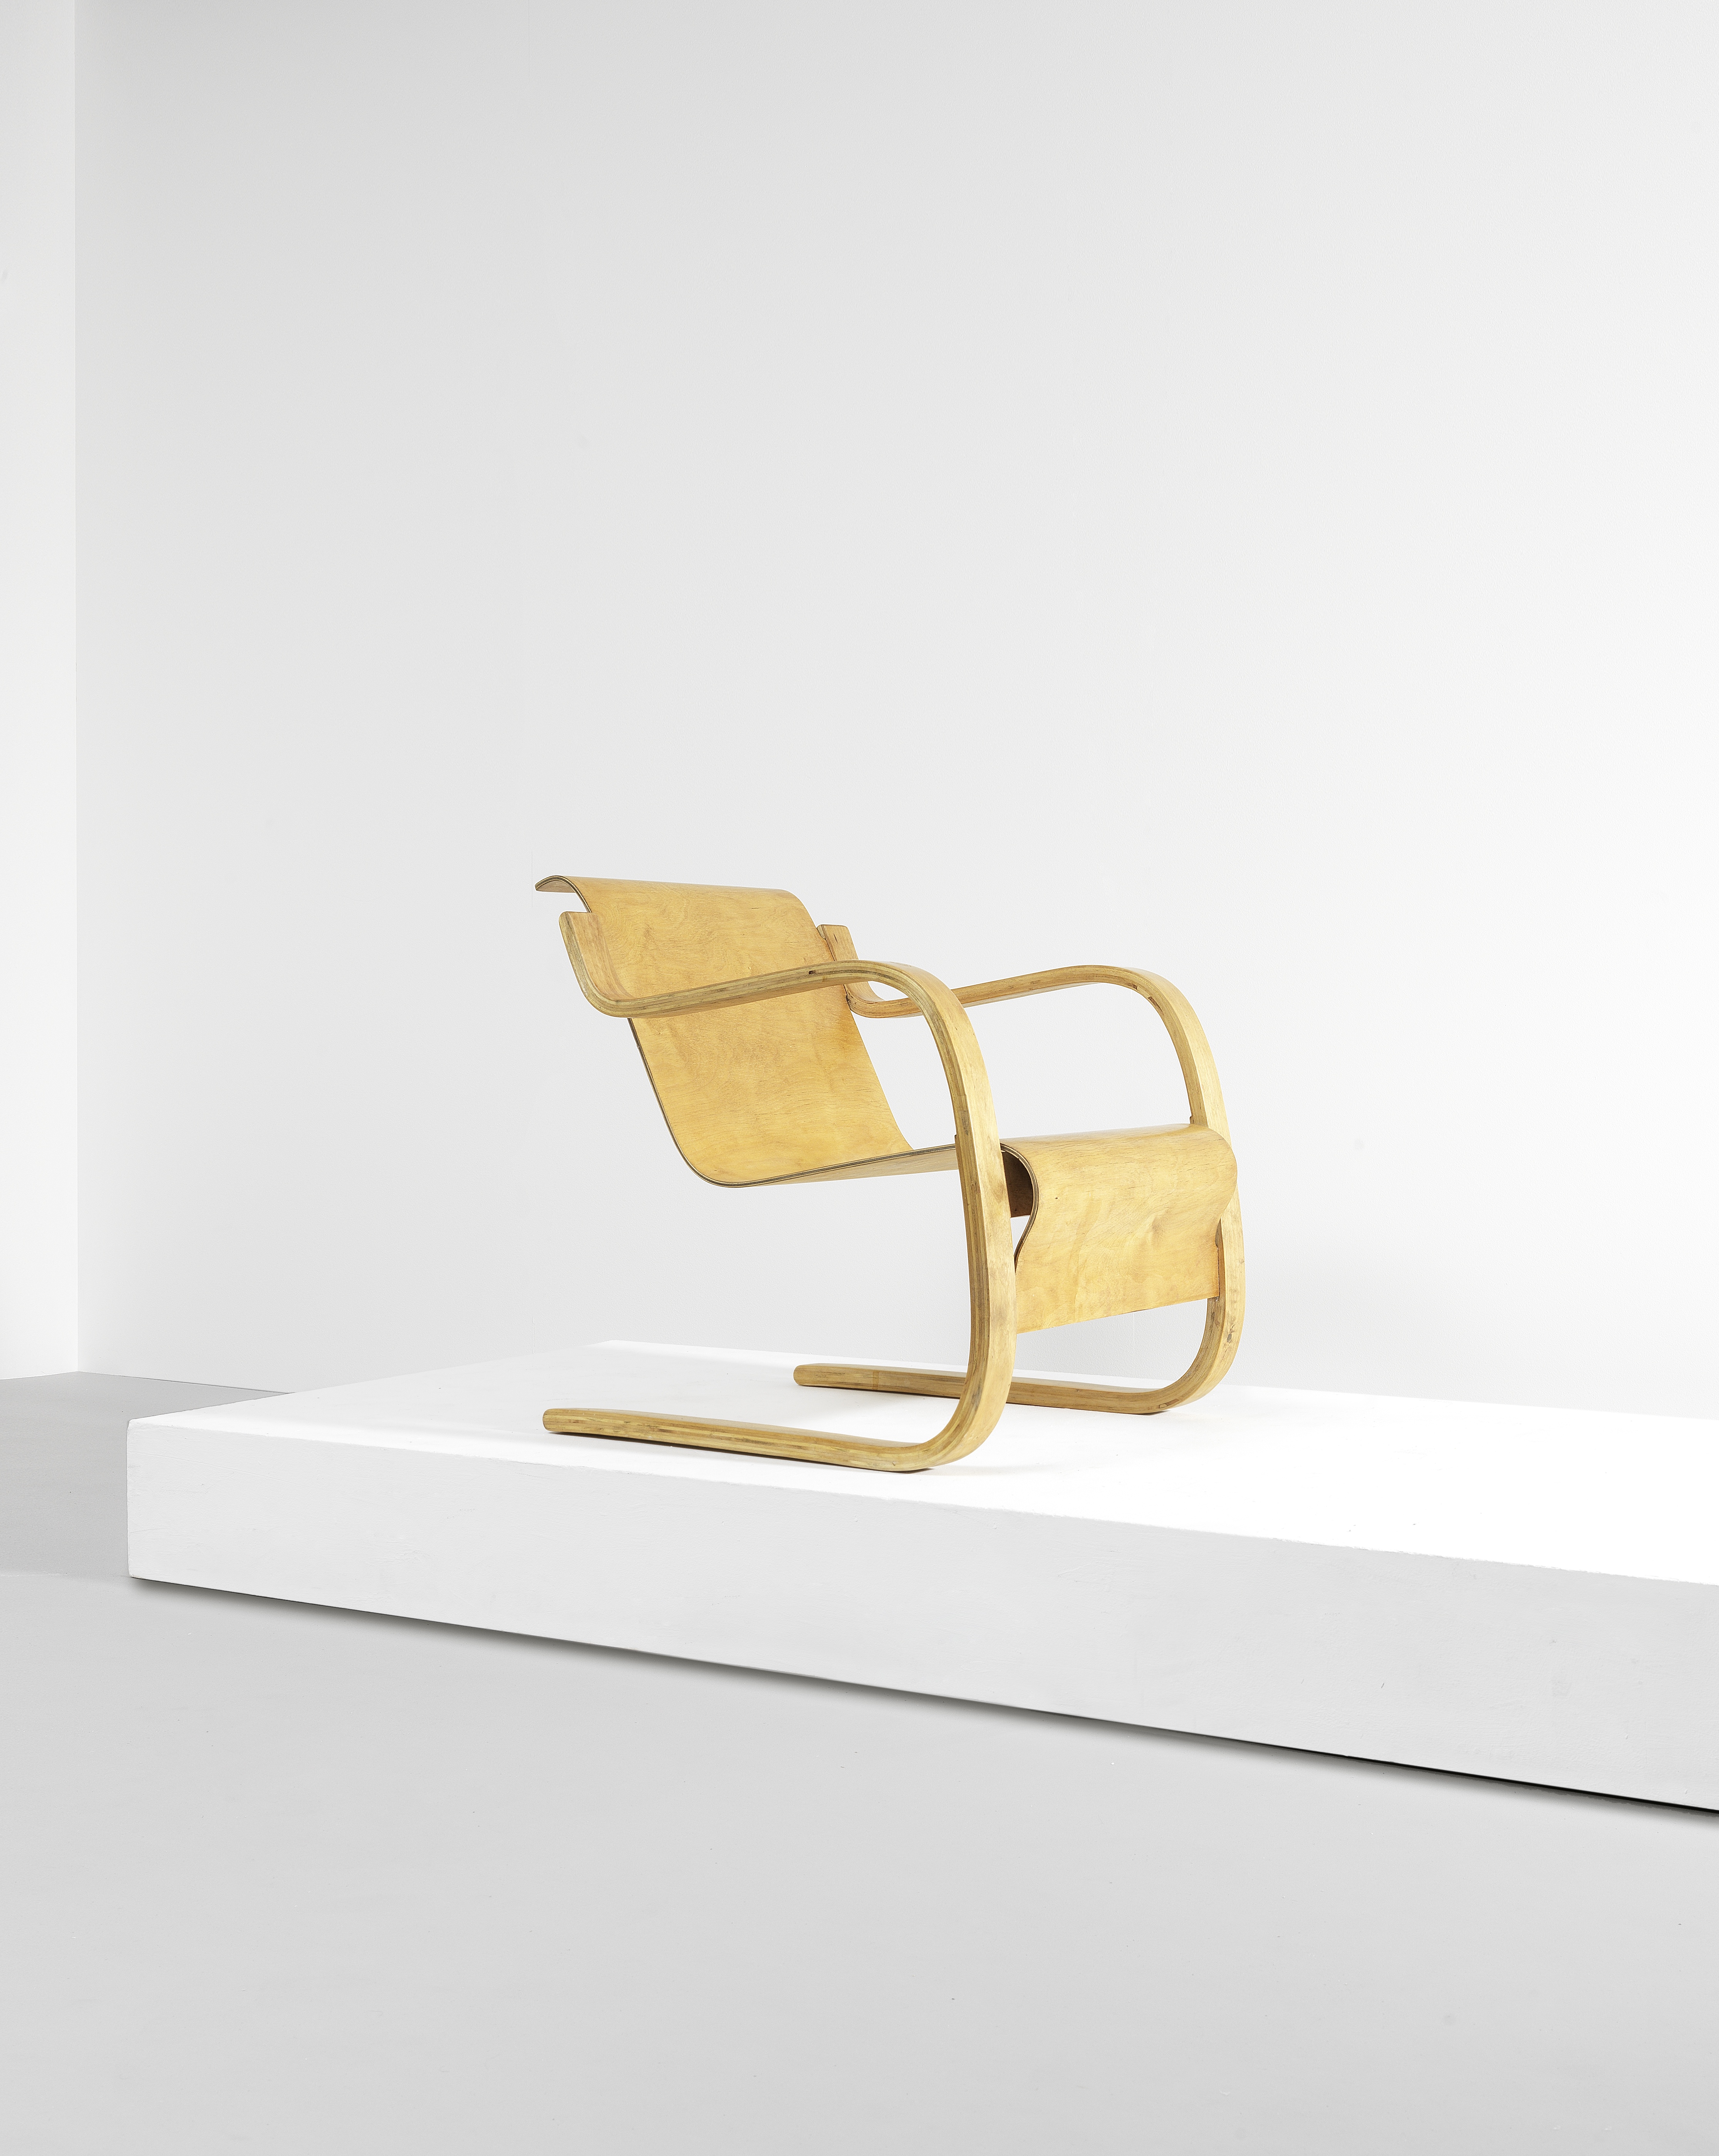 Alvar Aalto Rare armchair, model no. 42, designed 1932, executed 1930s-1940s